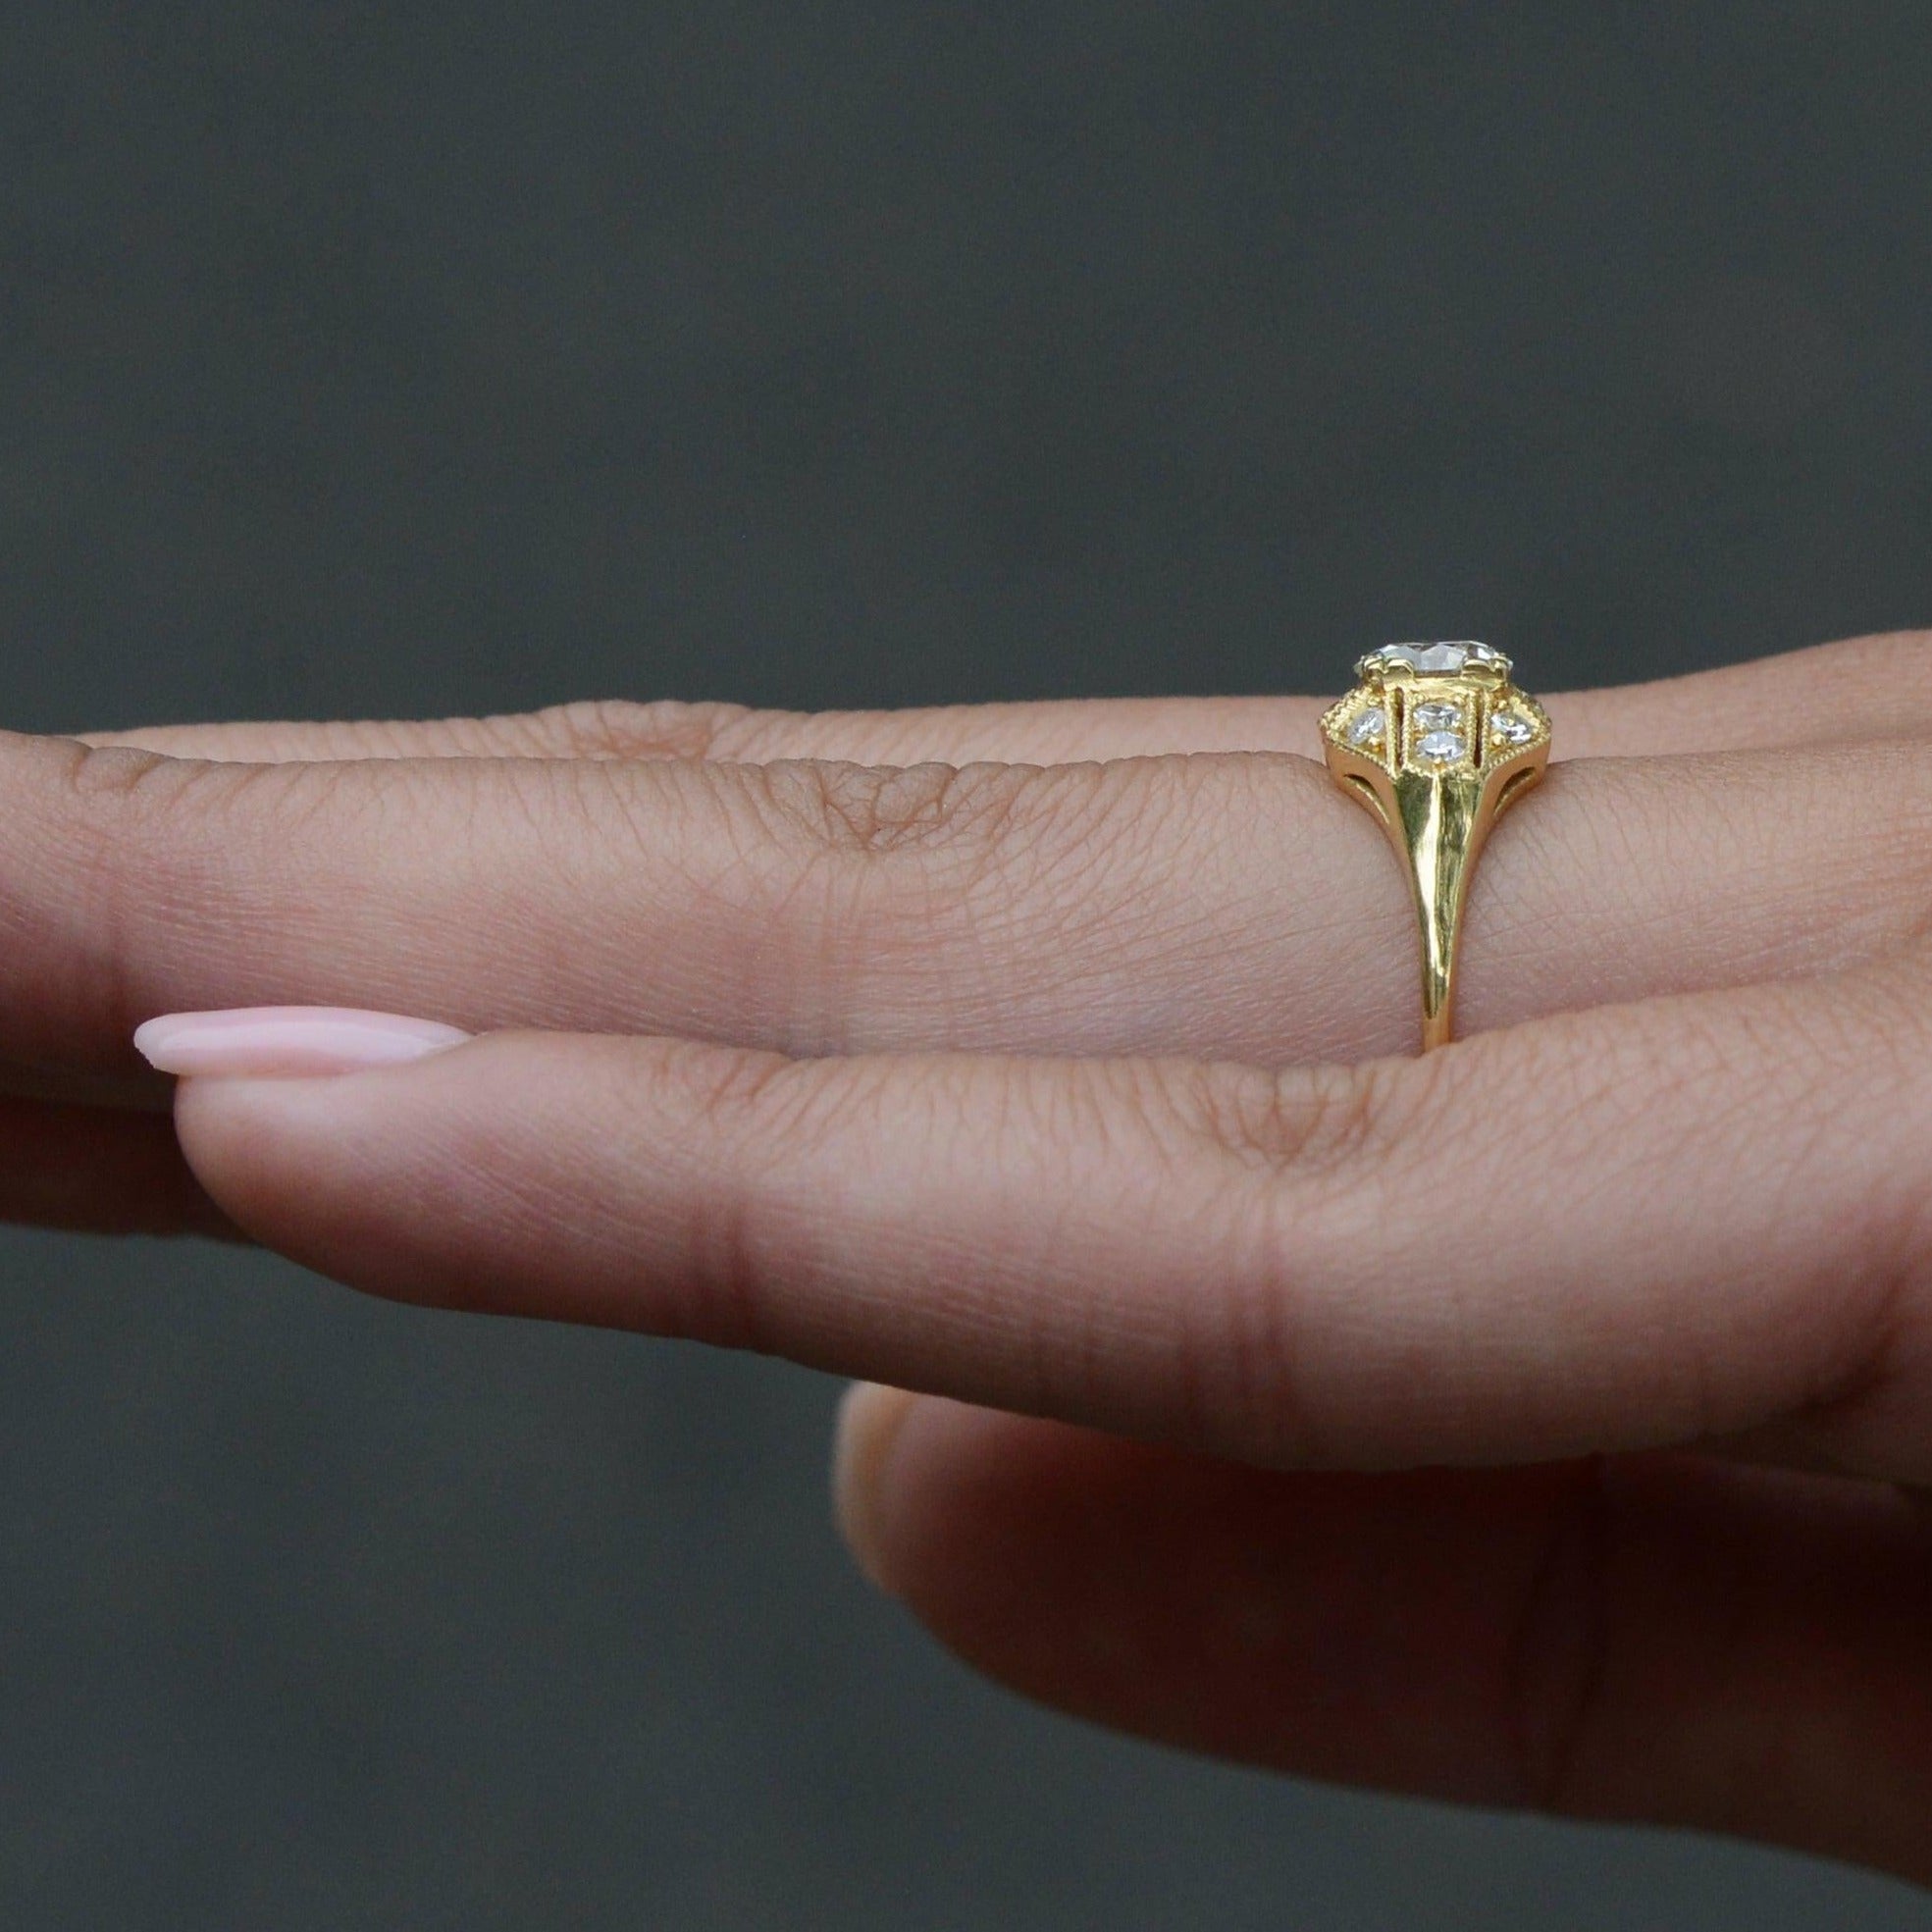 1 Carat Old European Cut Diamond Art Deco Engagement Ring